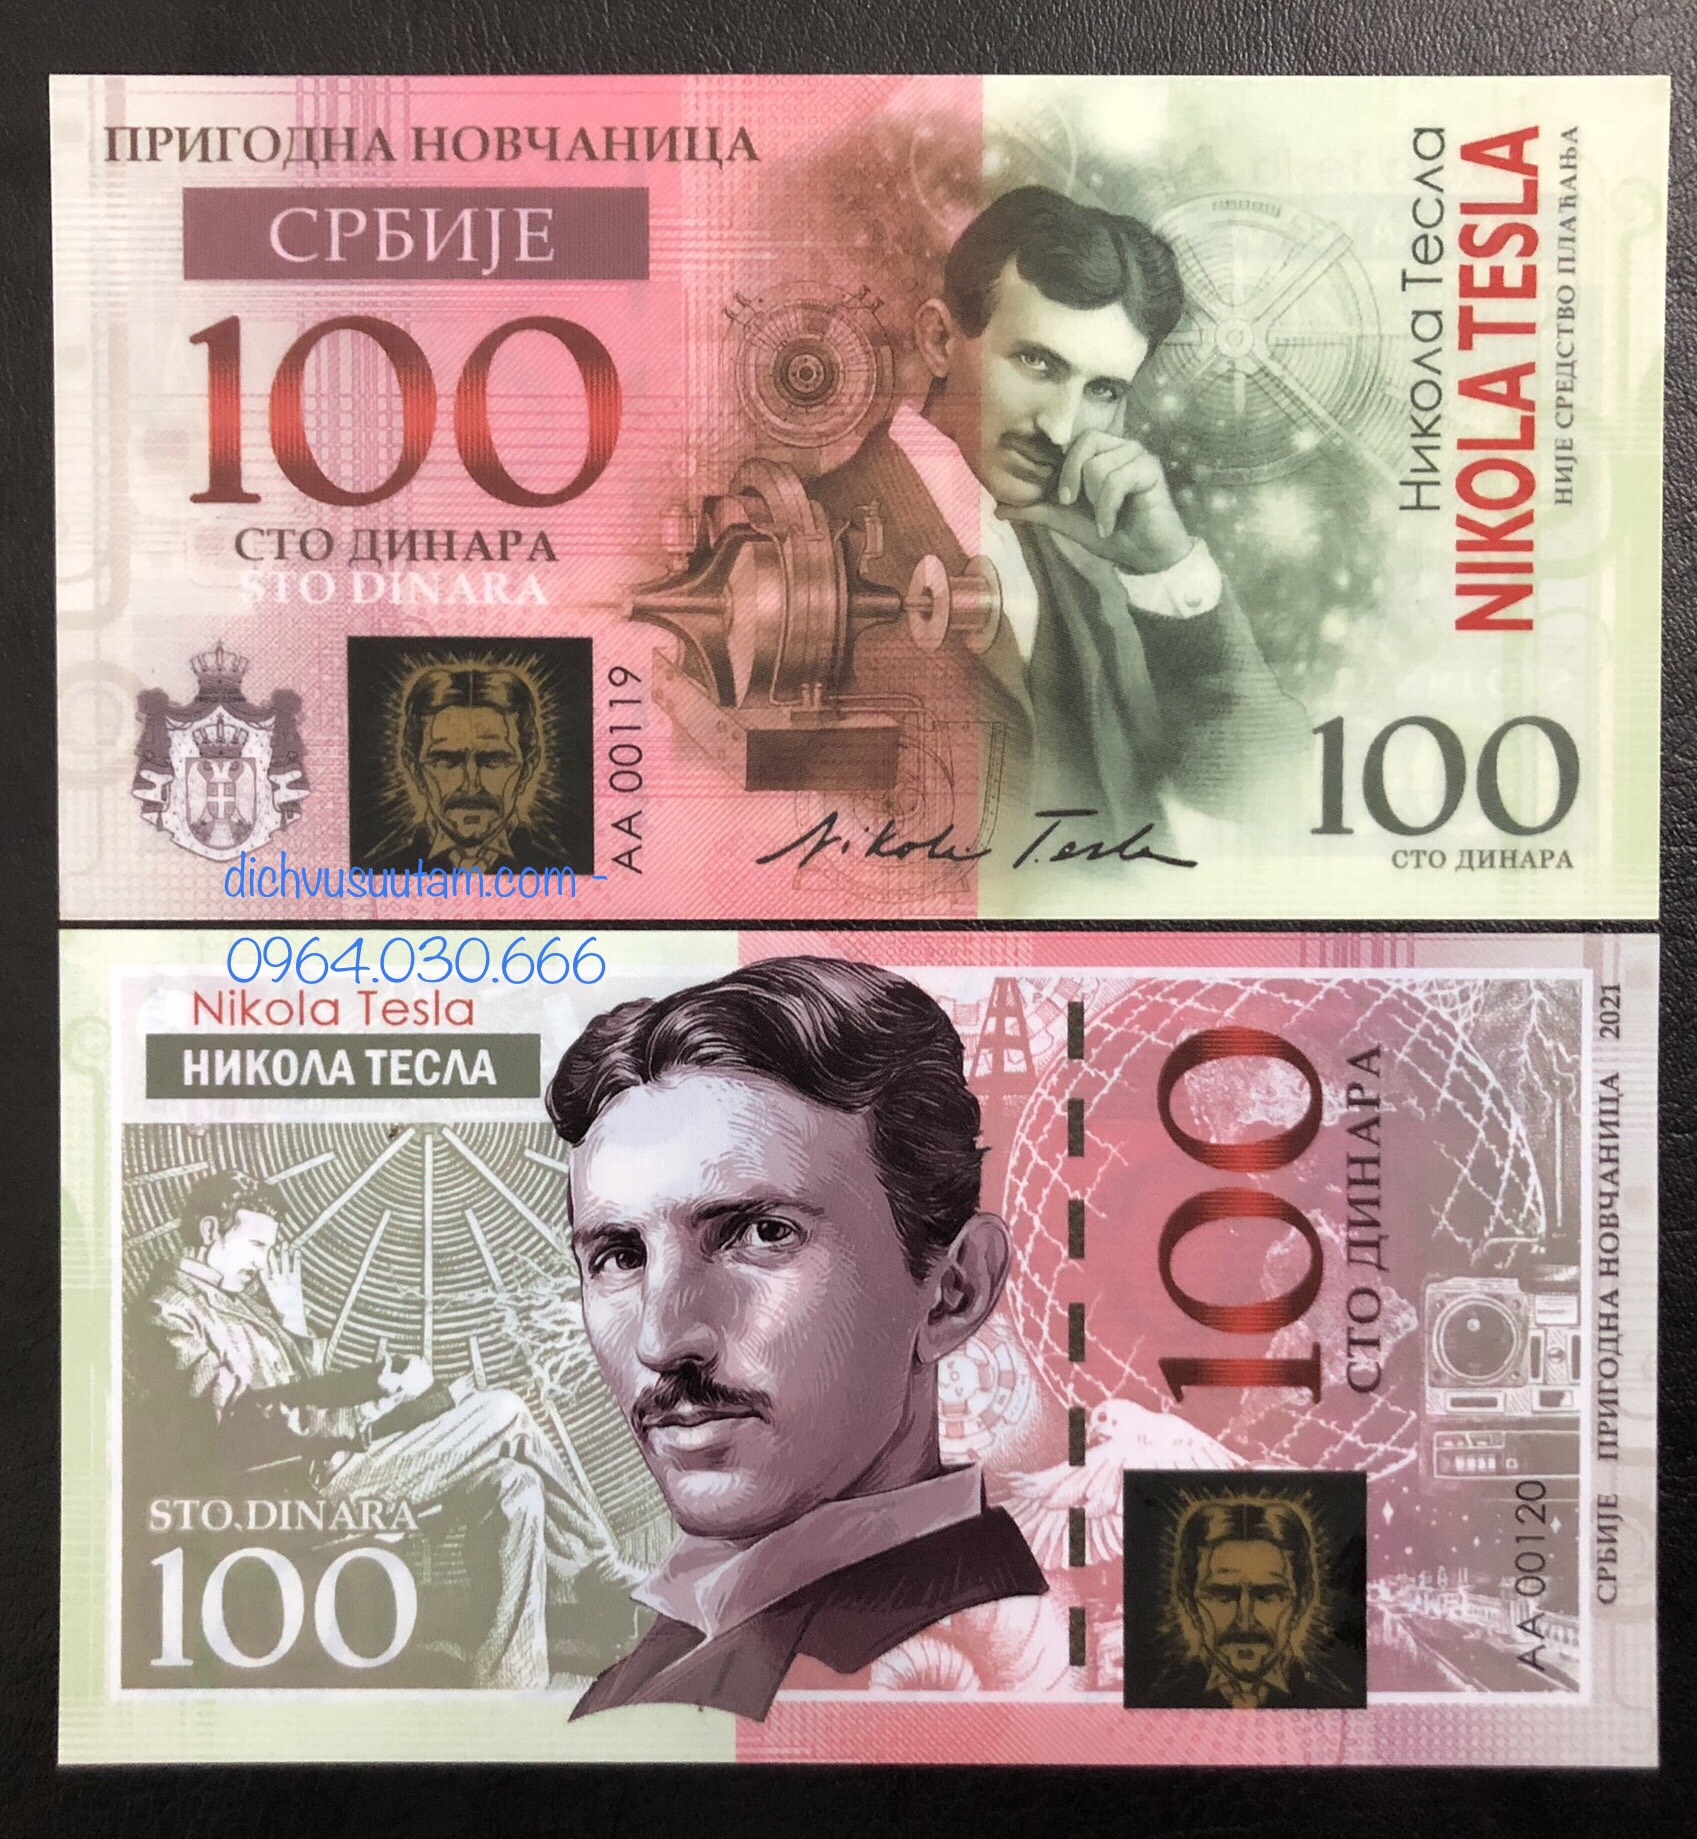 Tiền kỷ niệm Nikola Tesla 100 dinara sưu tầm, có bảo an phát quang